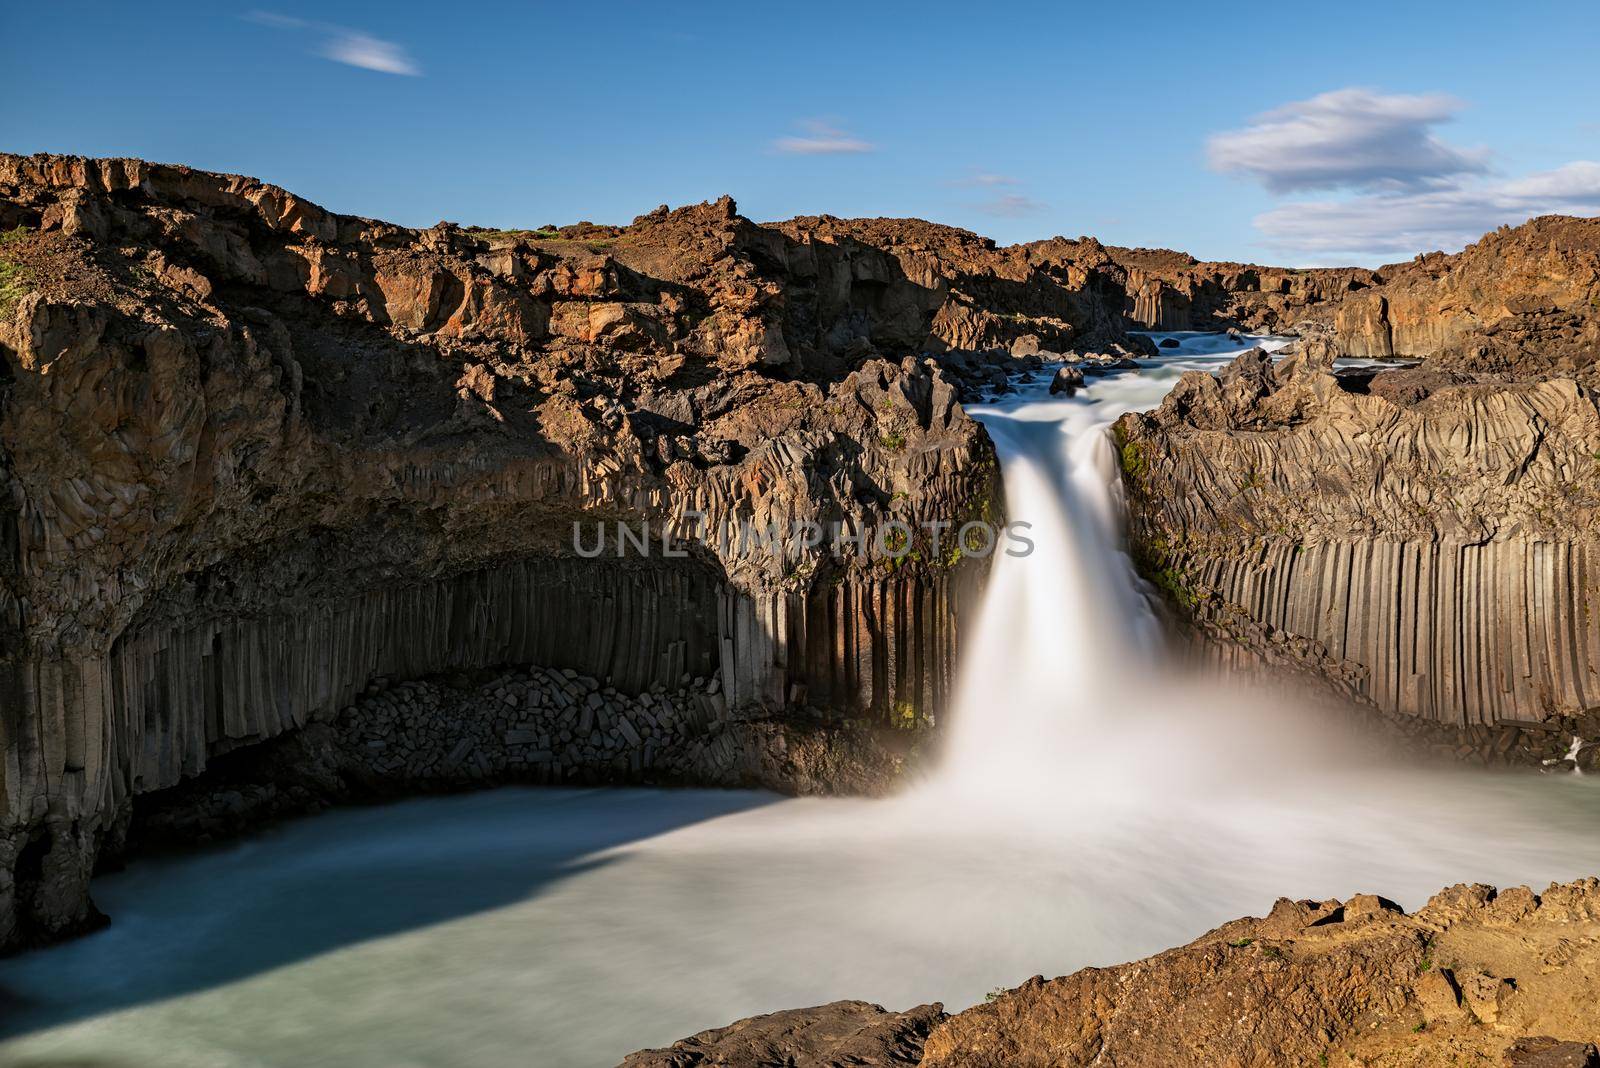 Aldeyjarfoss waterfall in Iceland by LuigiMorbidelli